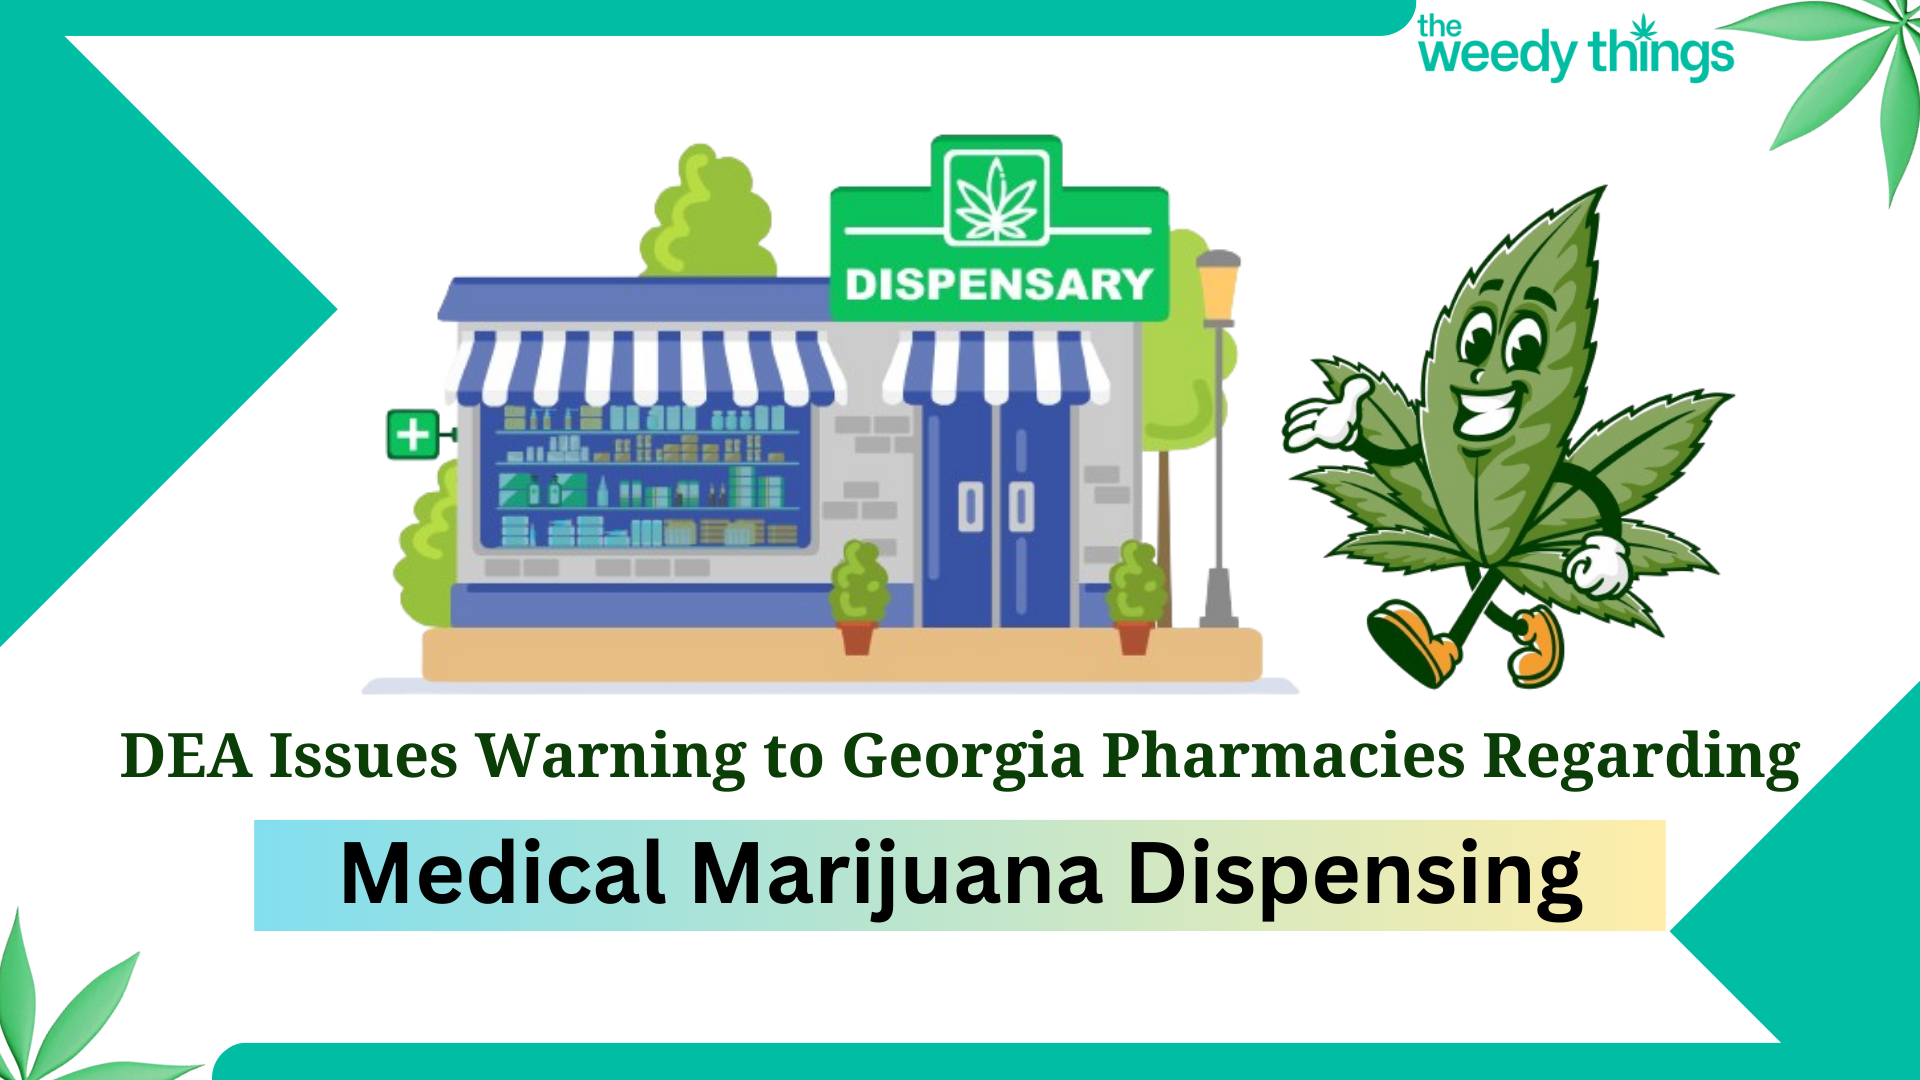 DEA Issues Warning to Georgia Pharmacies Regarding Medical Marijuana Dispensing